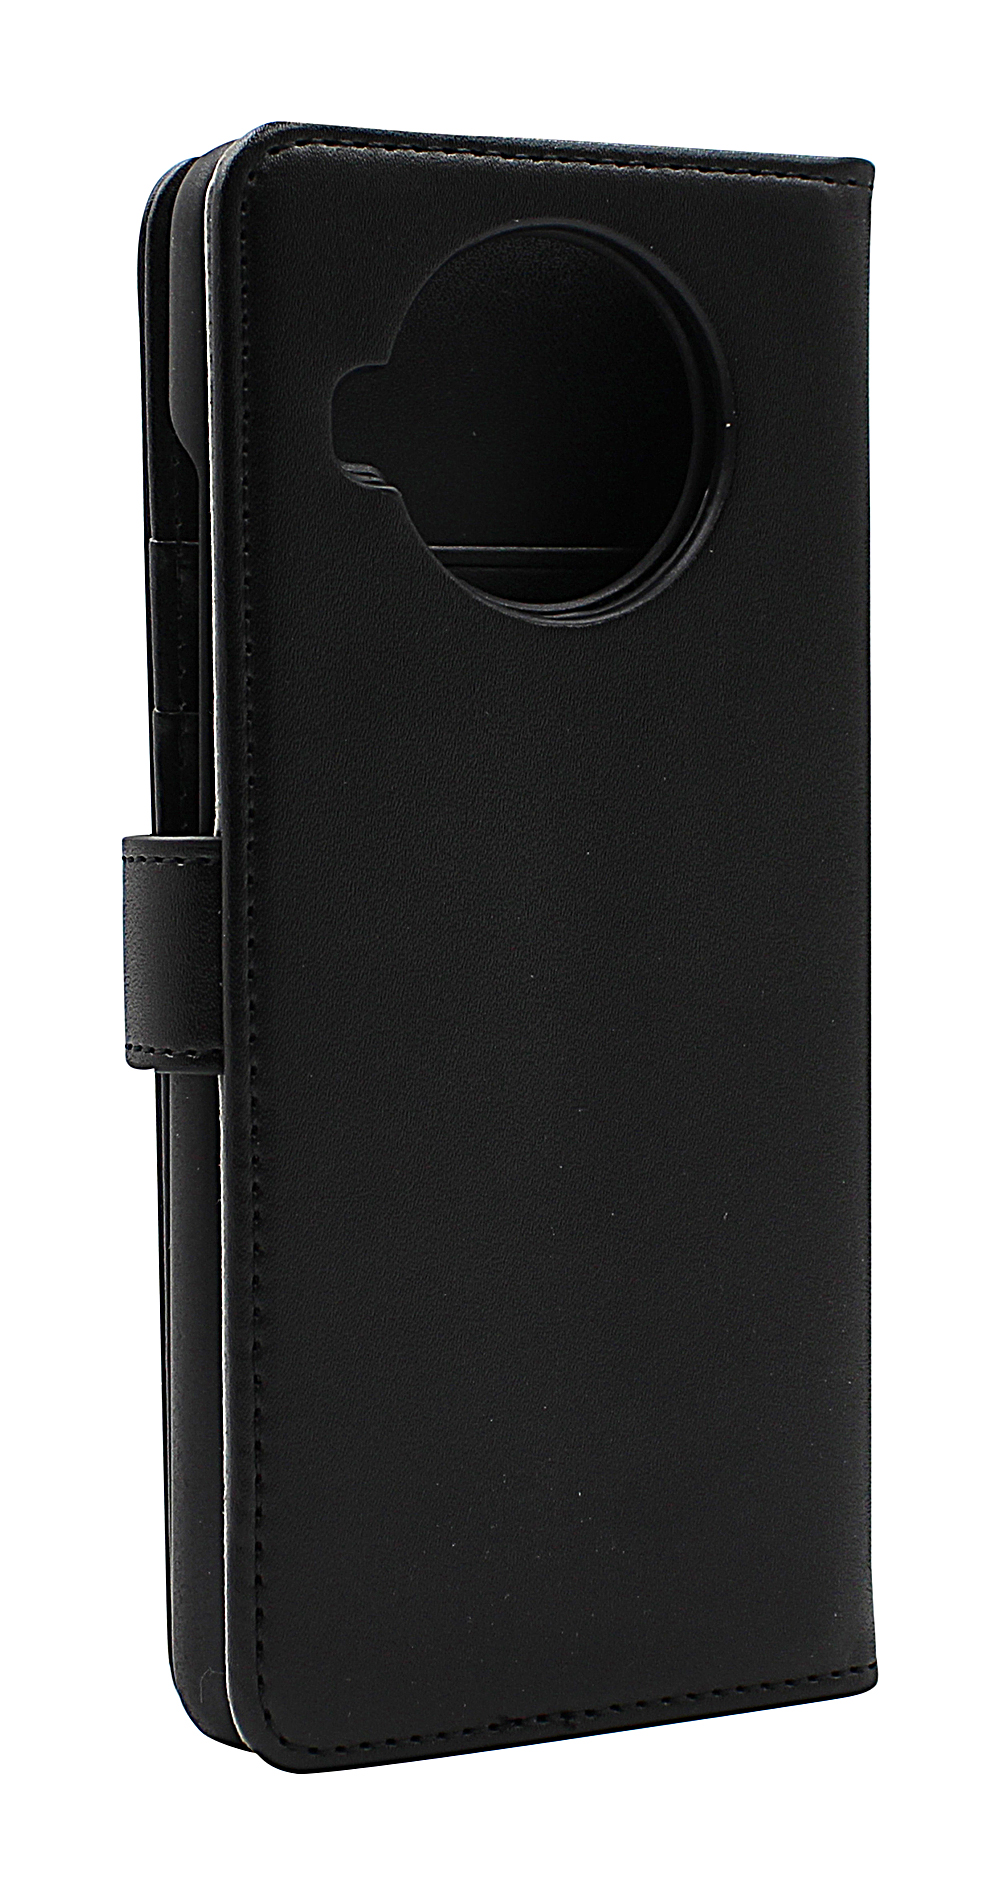 CoverIn Skimblocker Magneettikotelo Xiaomi Mi 10T Lite